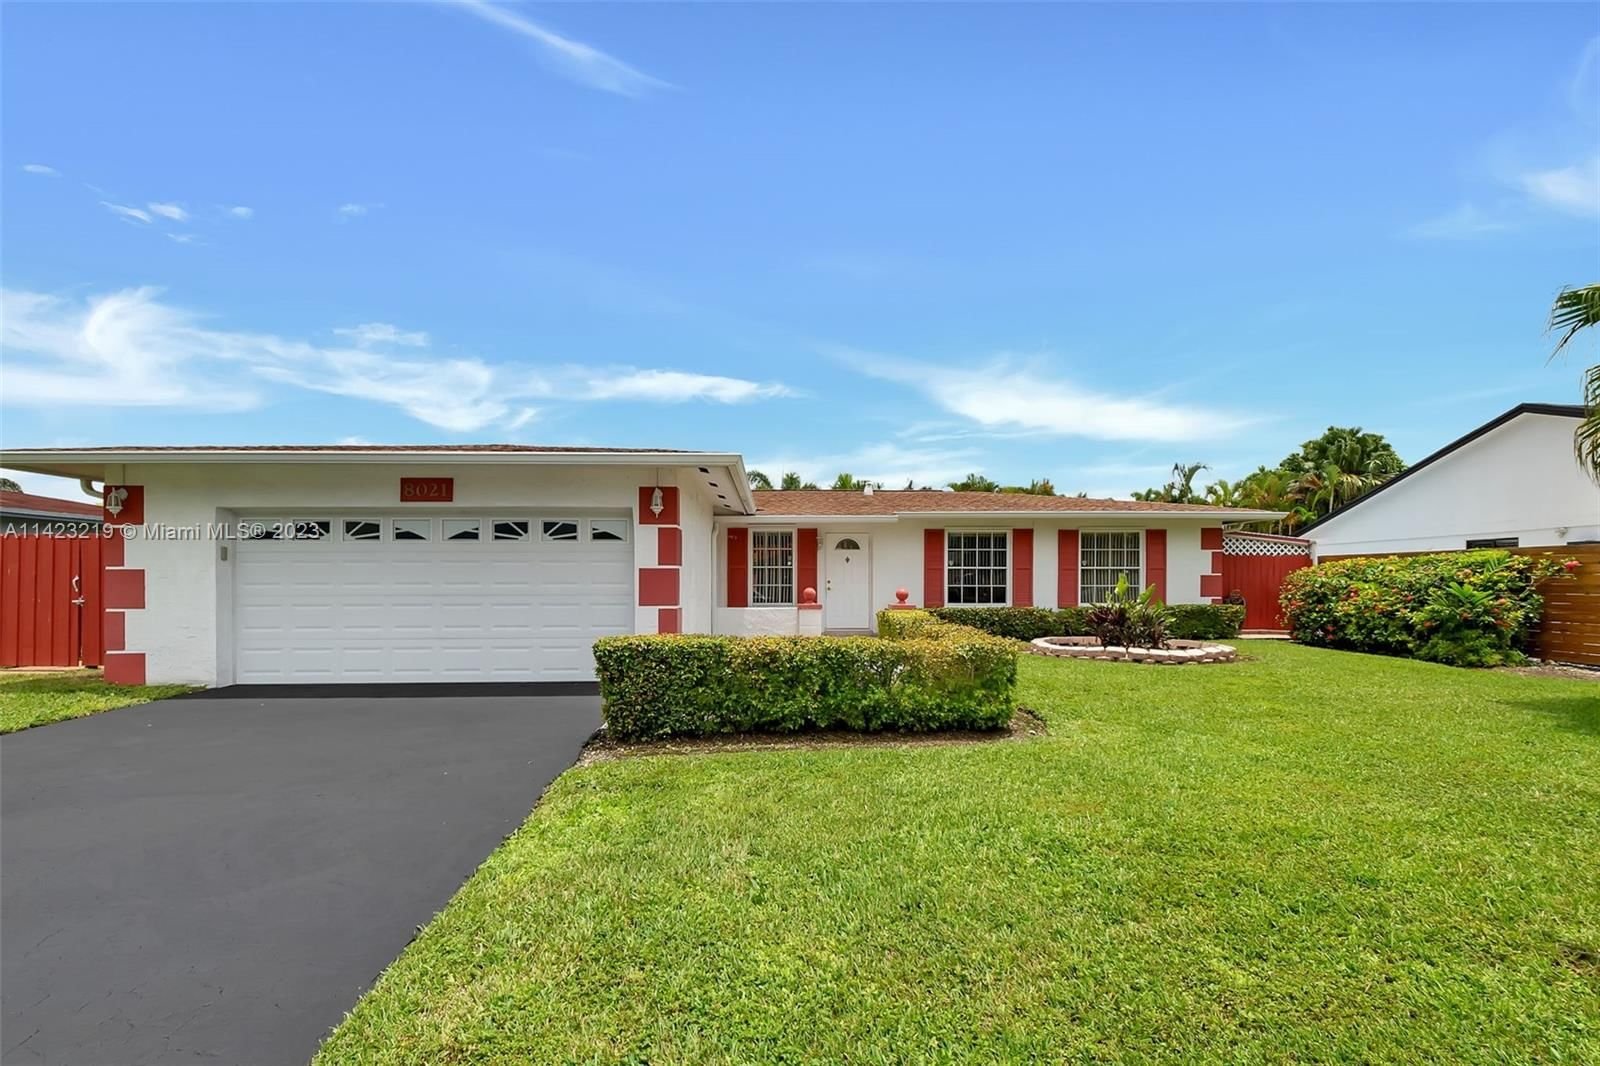 Real estate property located at 8021 134th Ave, Miami-Dade County, Miami, FL